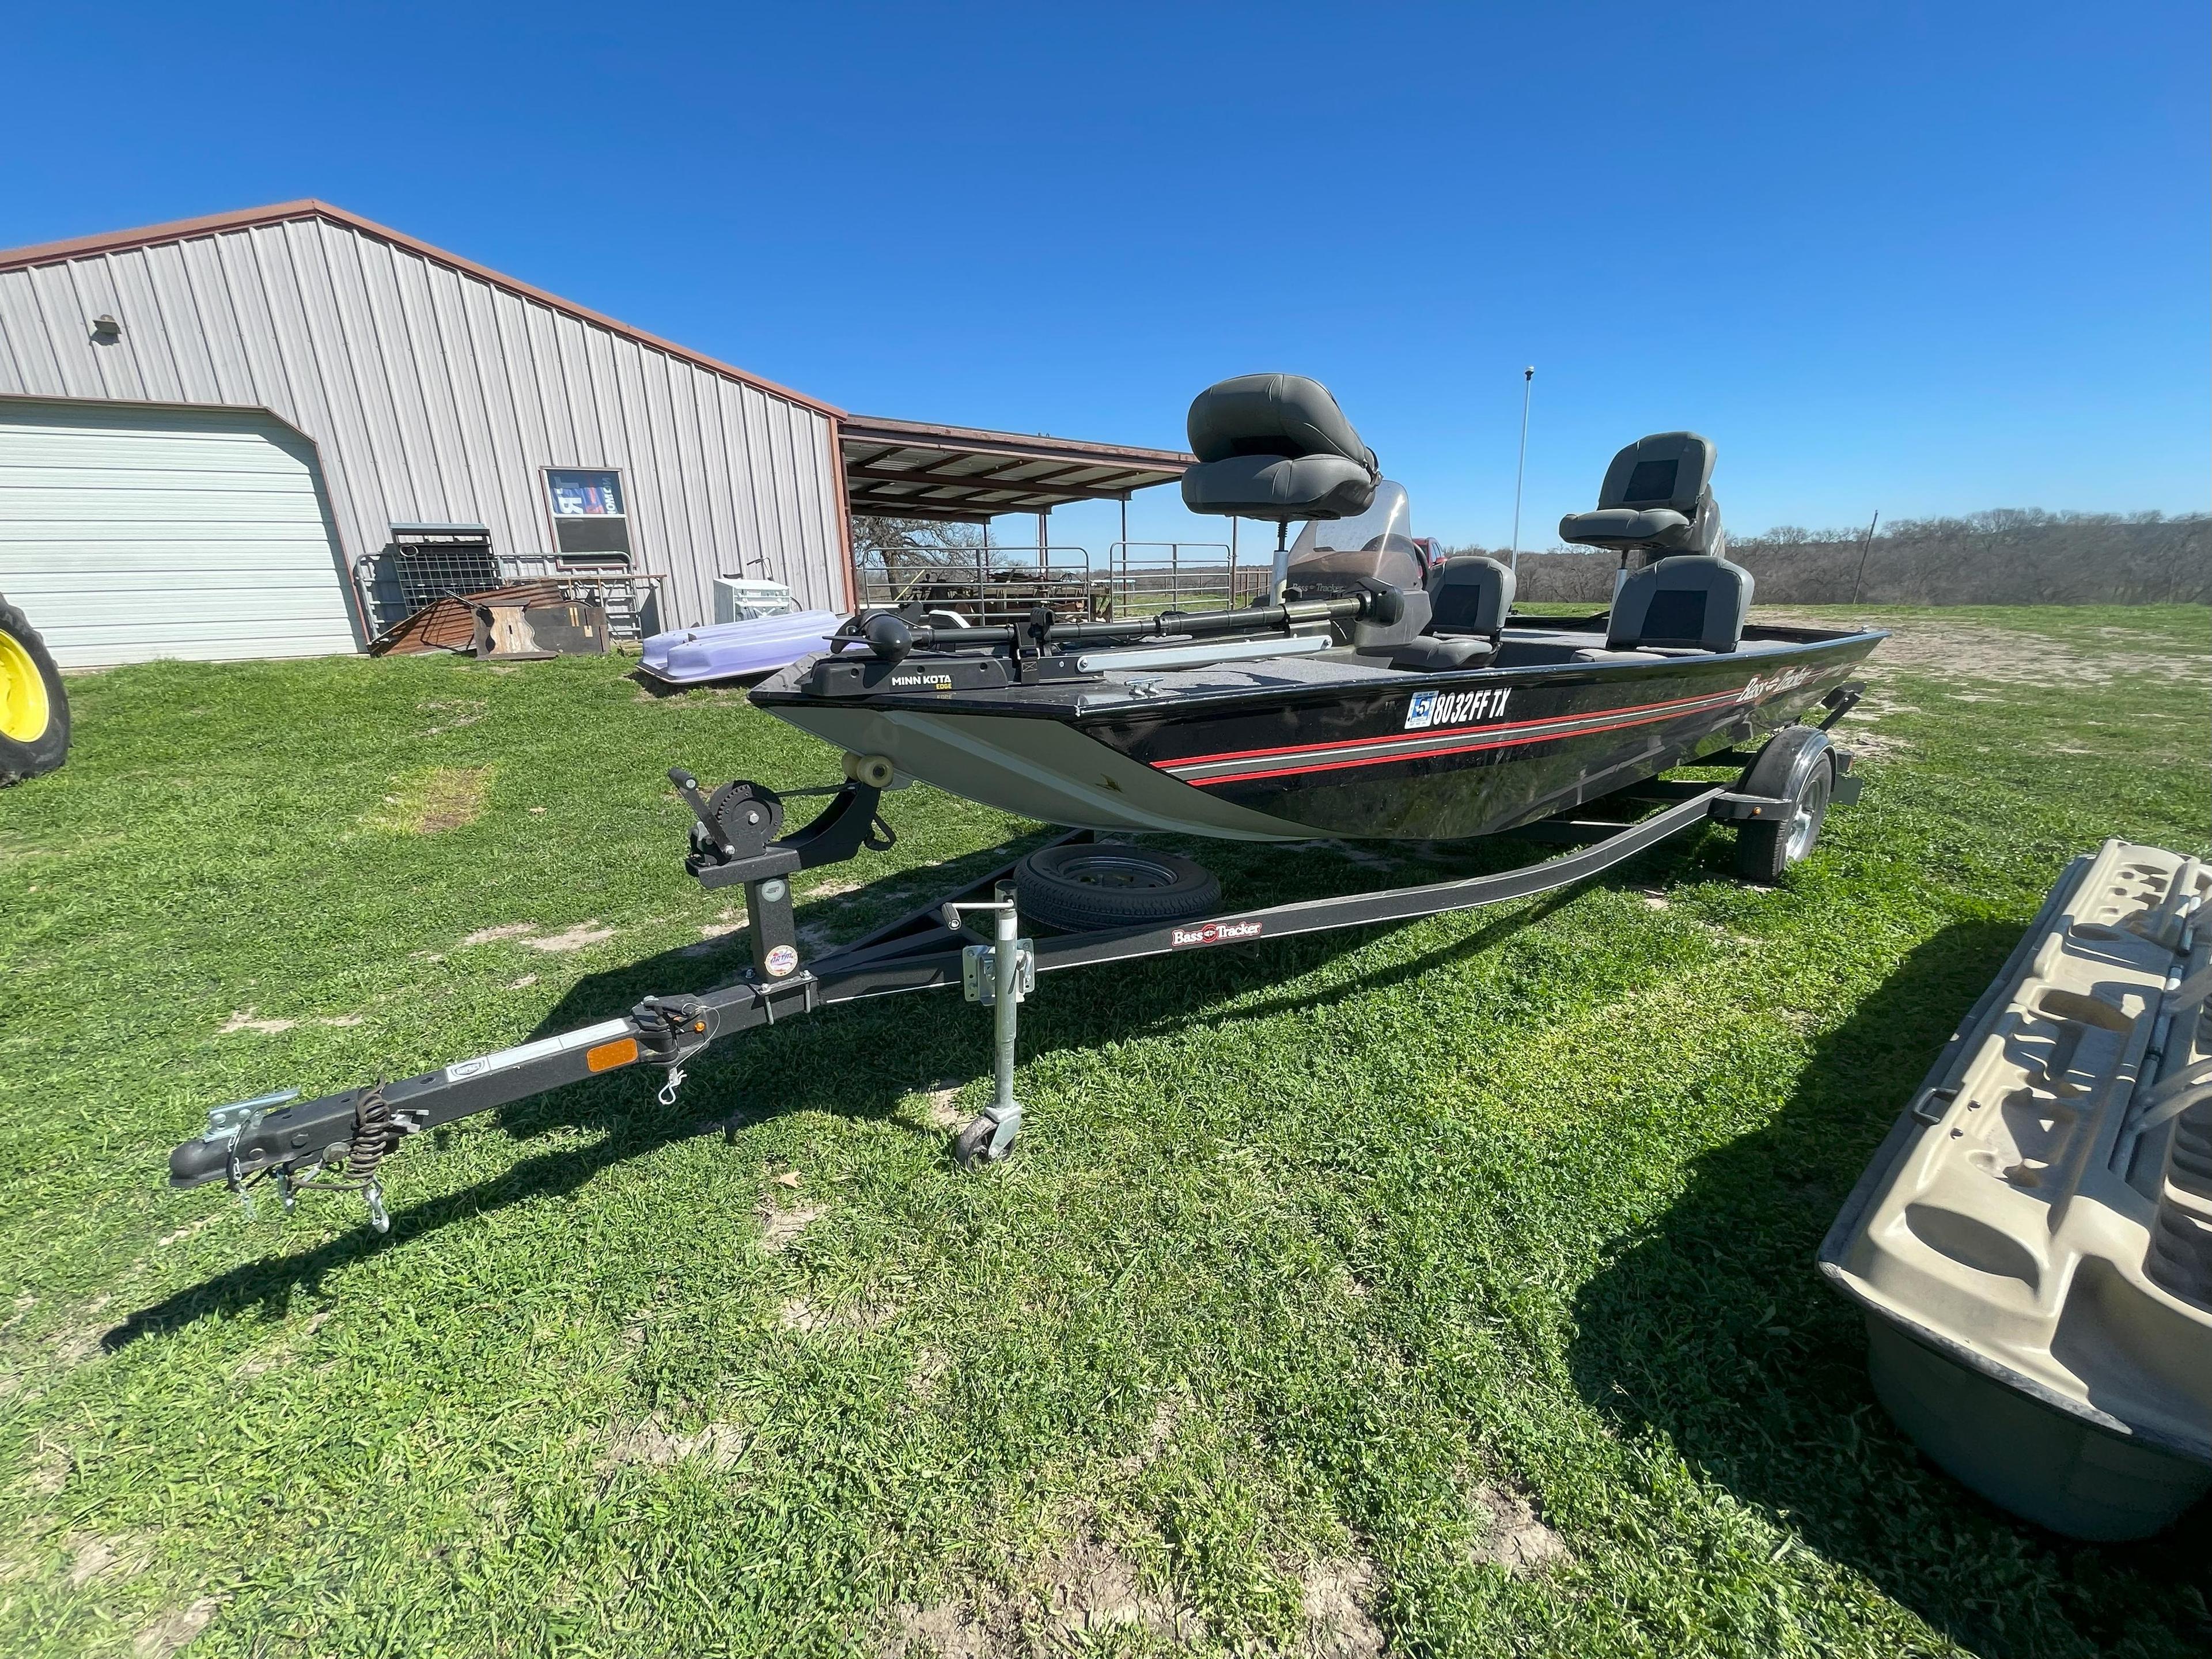 LOCATION WORTHAM, TX: 2019 Tracker Classic XL Aluminum Hull Bass Boat, 16' 8" Length, 6' 5" Beam, 78